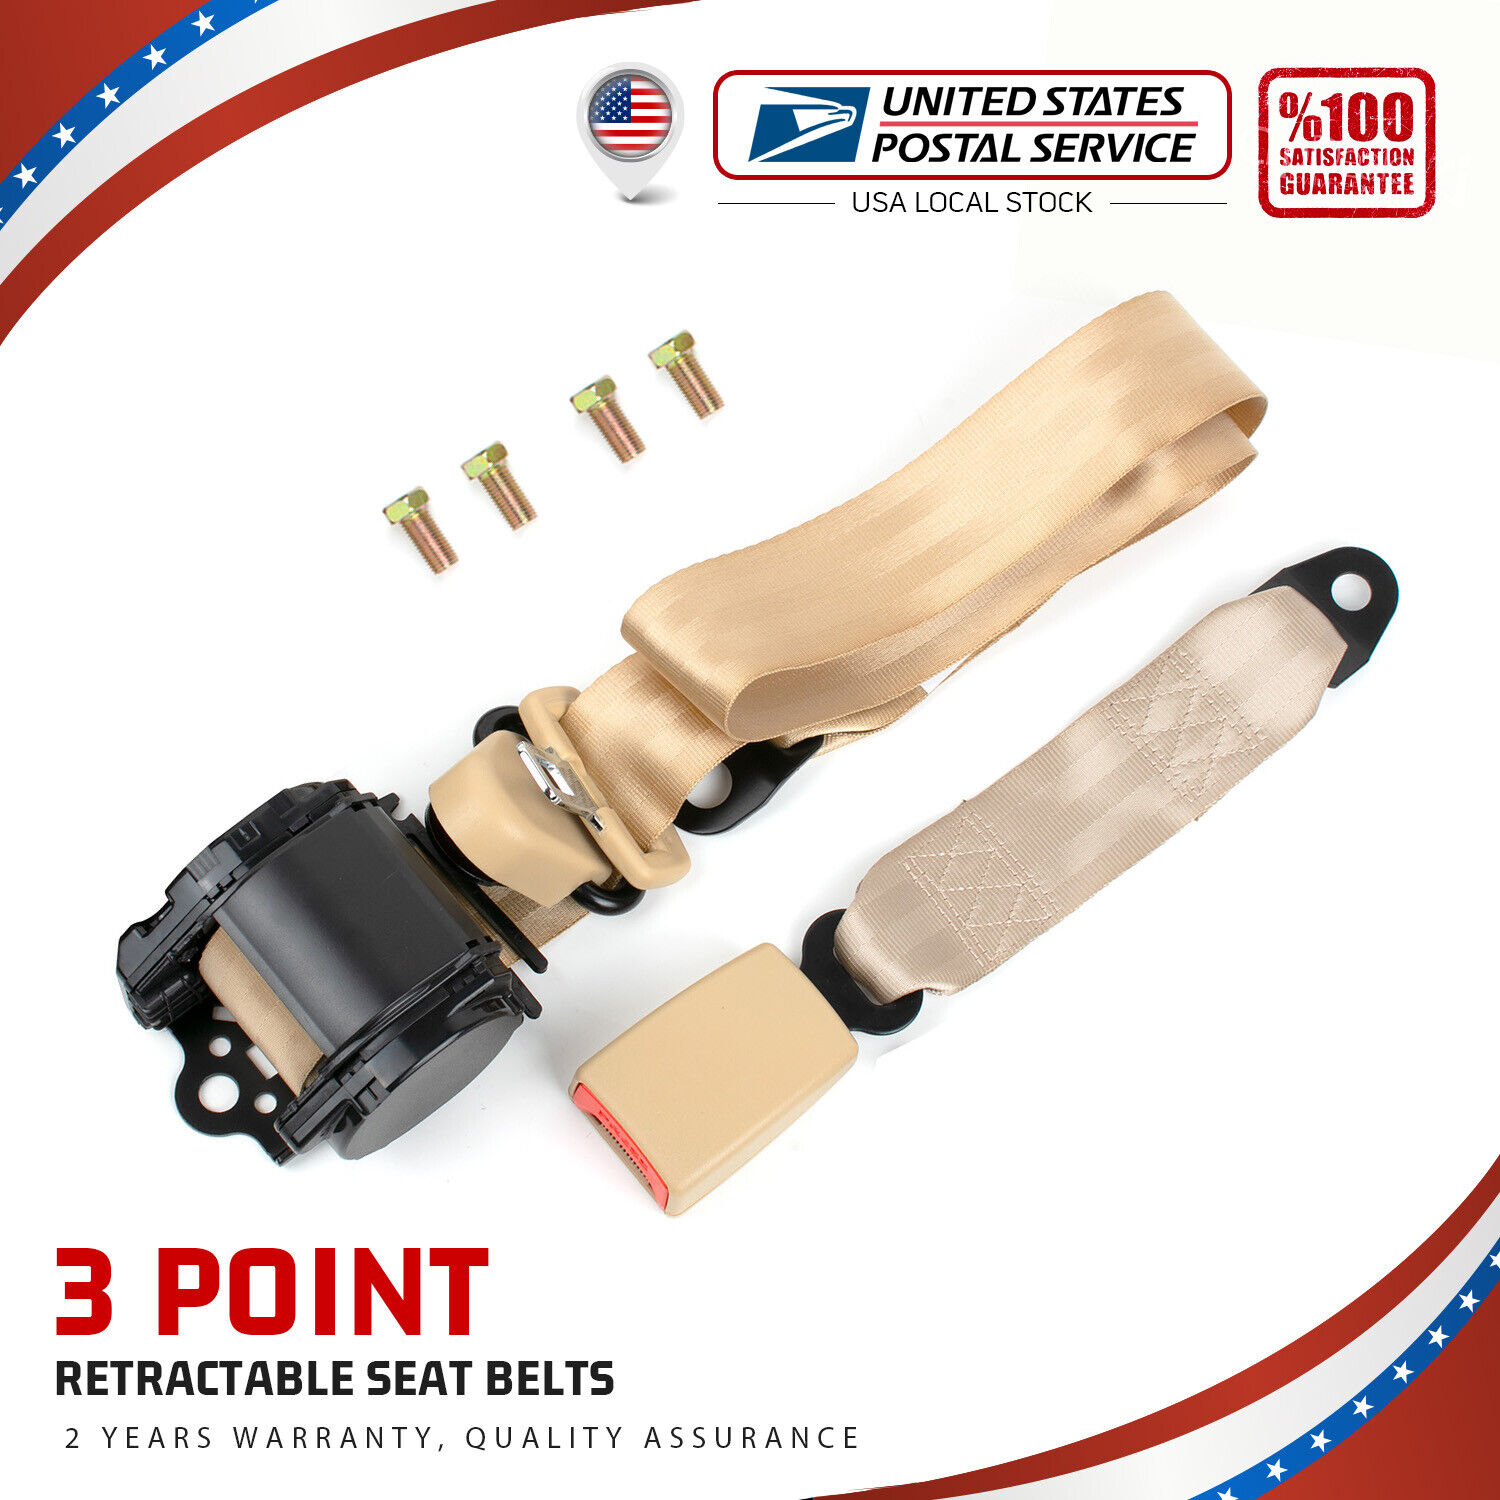 1x beige Universal 3 Point Retractable Adjustable Car Seat Belt USA Sale